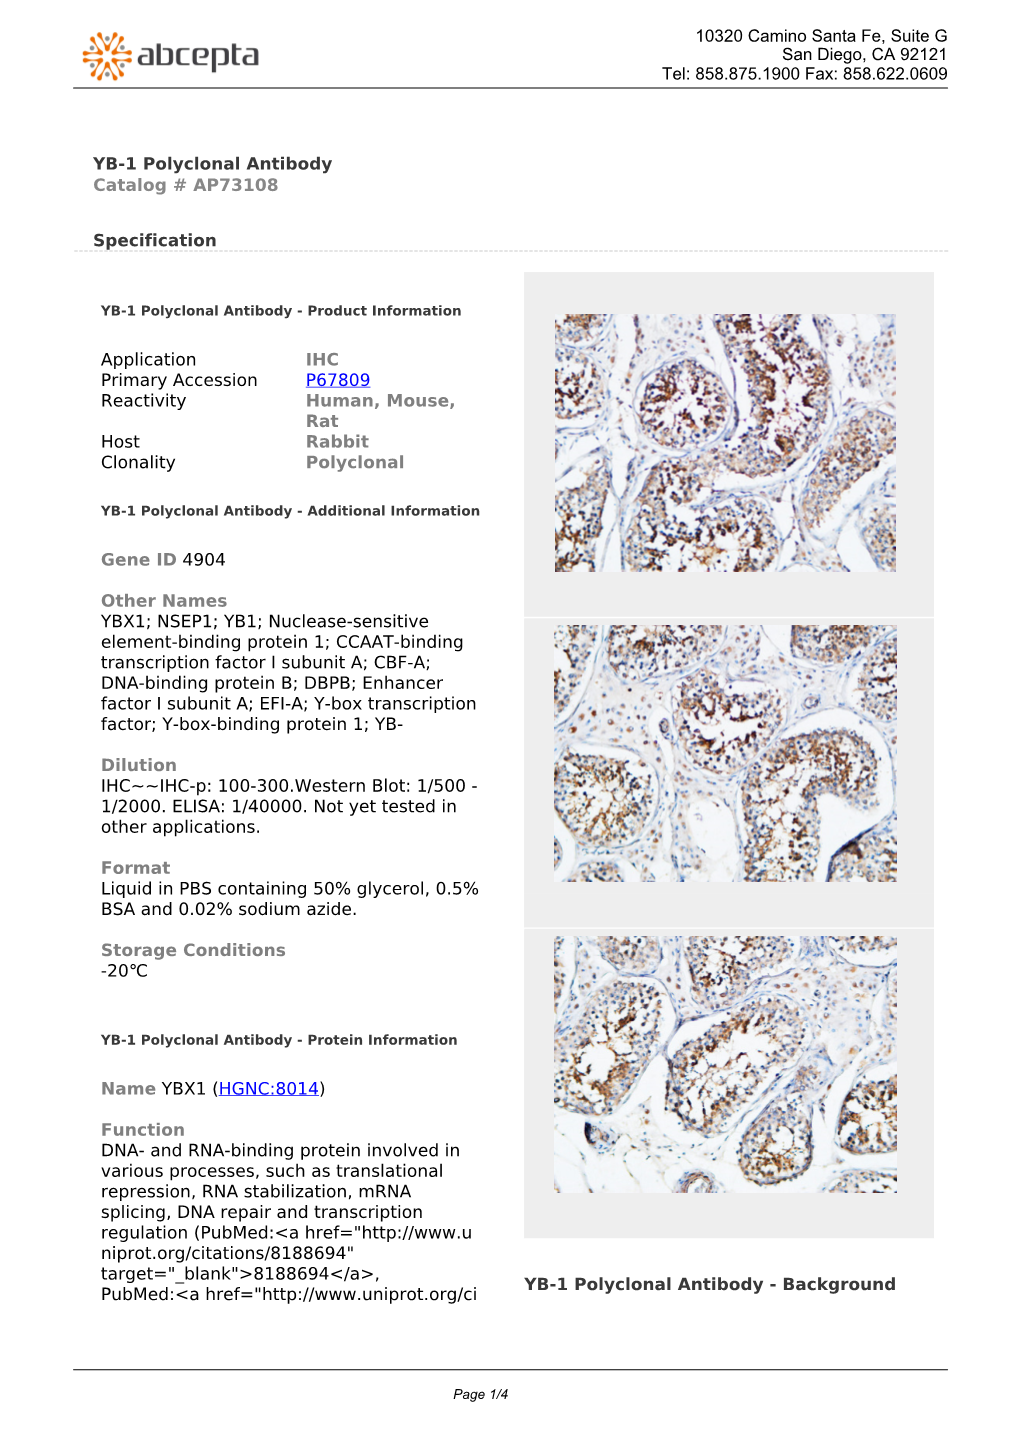 YB-1 Polyclonal Antibody Catalog # AP73108